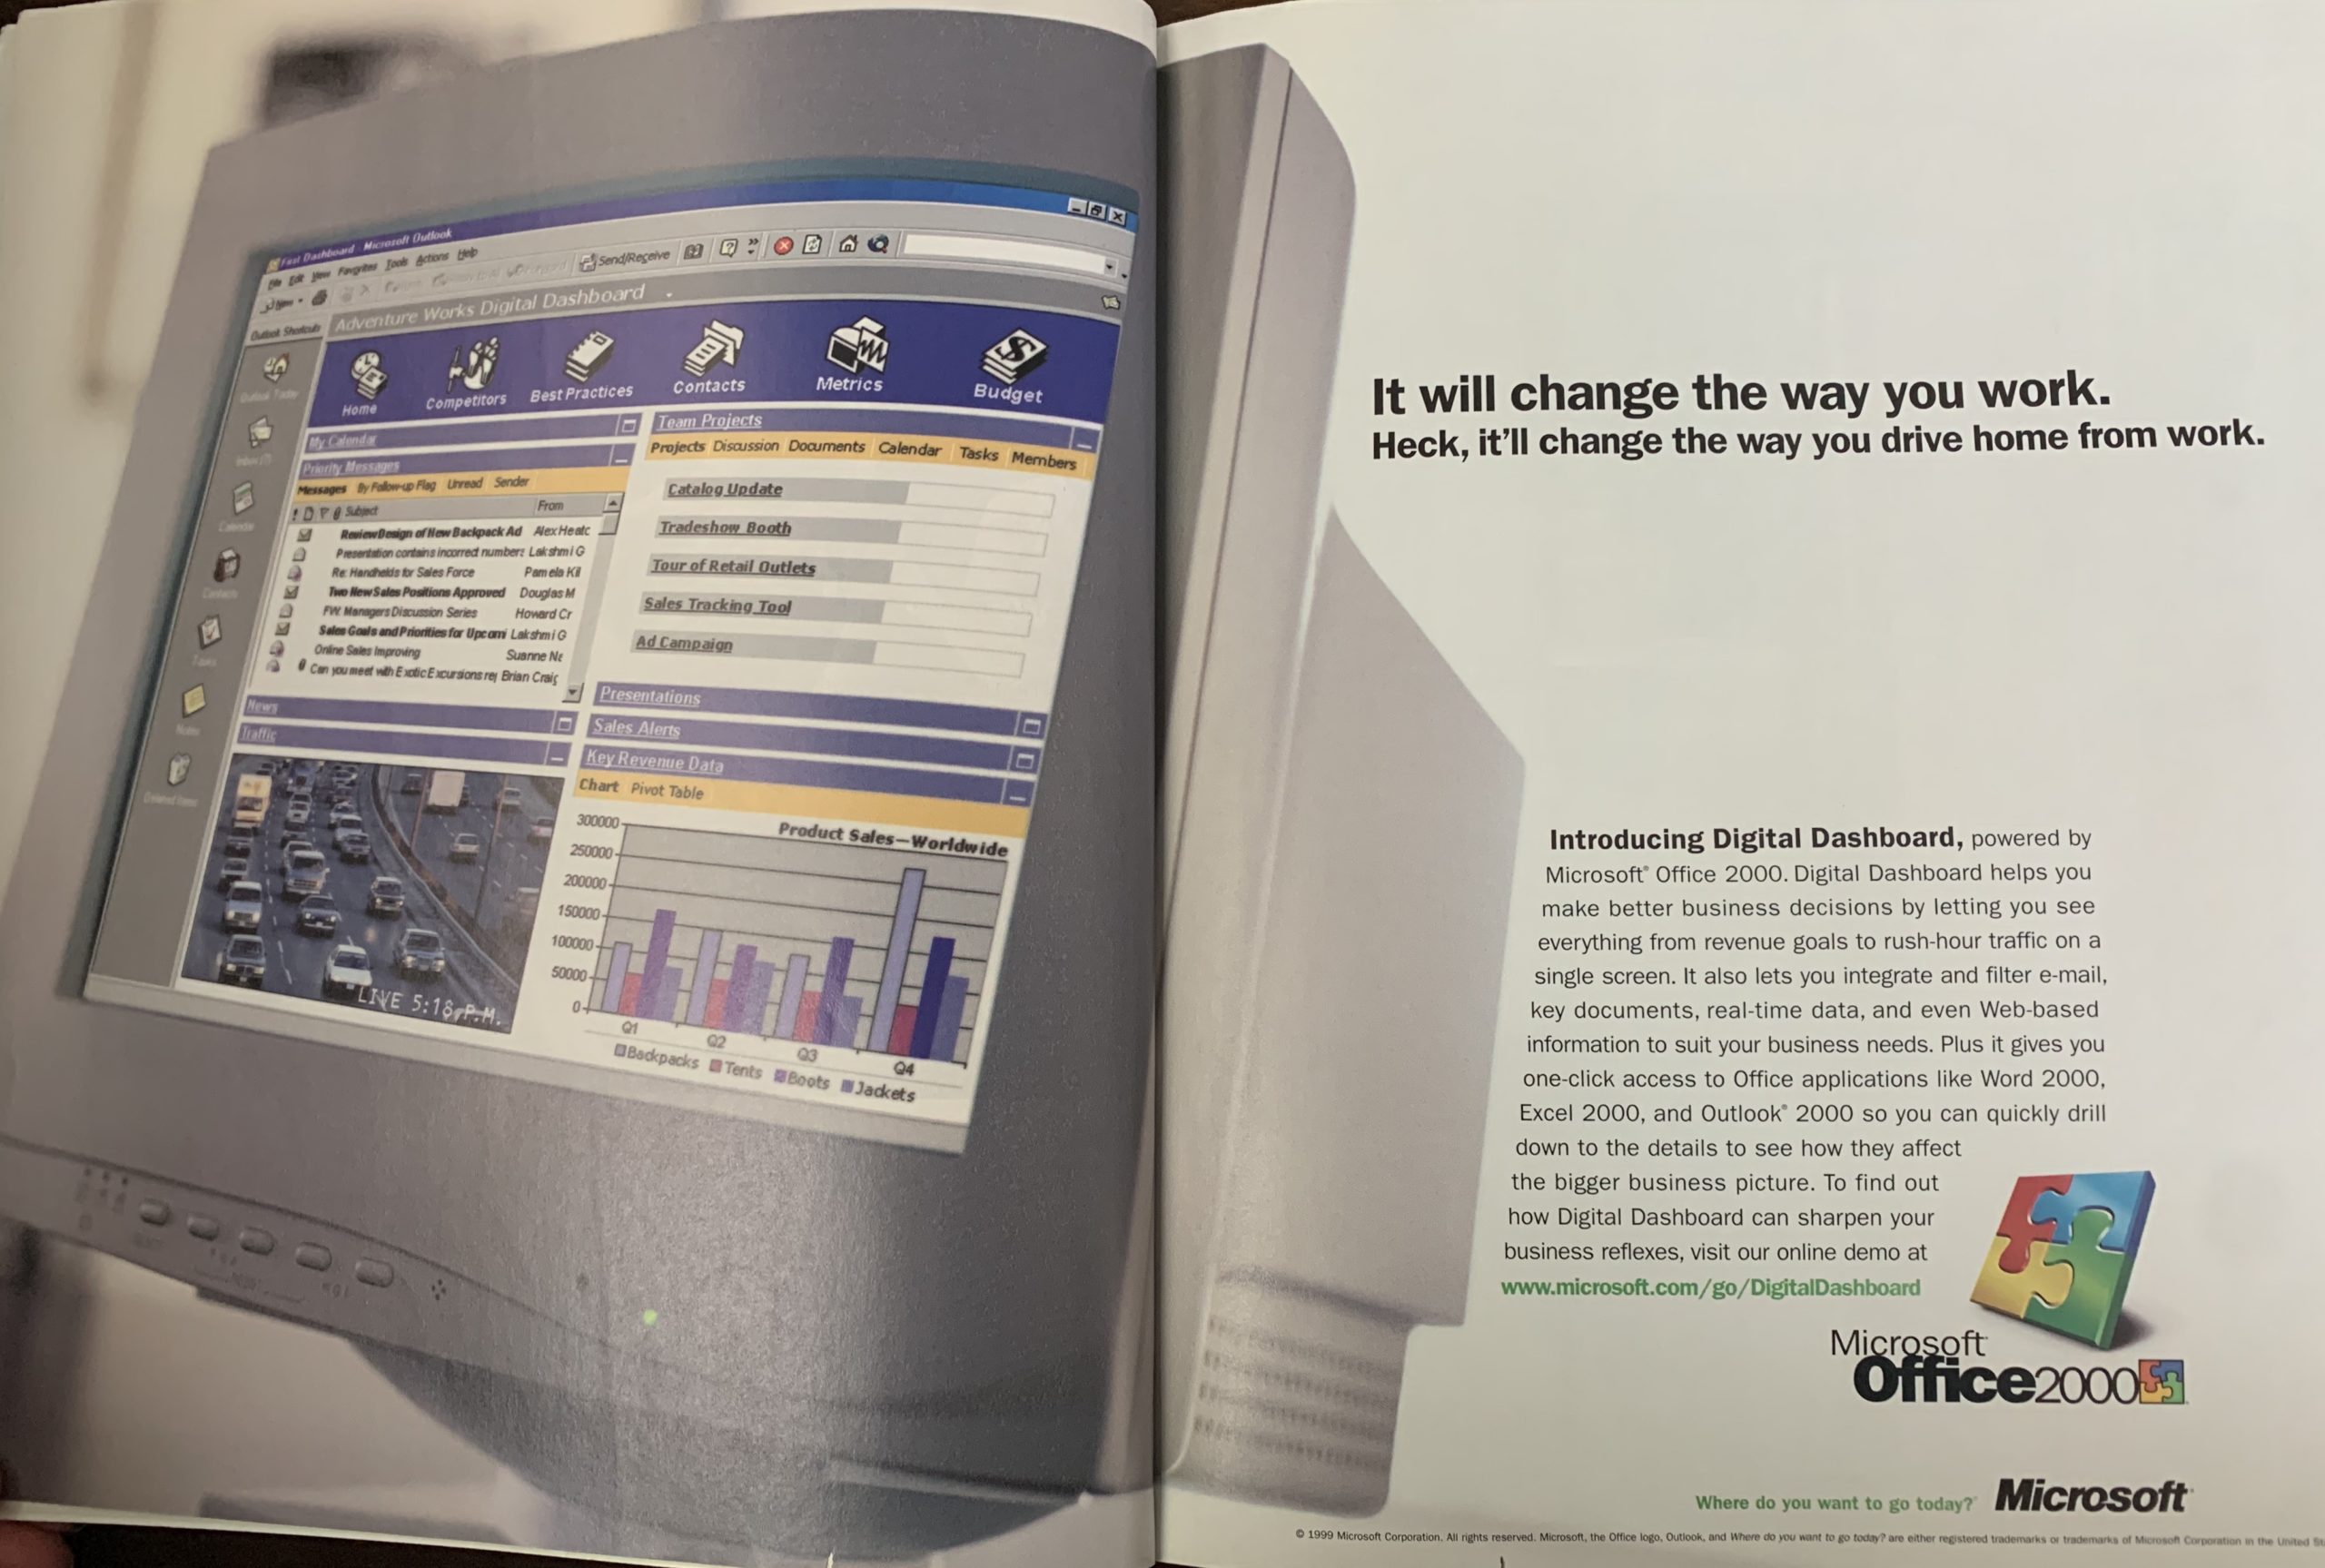 Microsoft Office 2000 ad